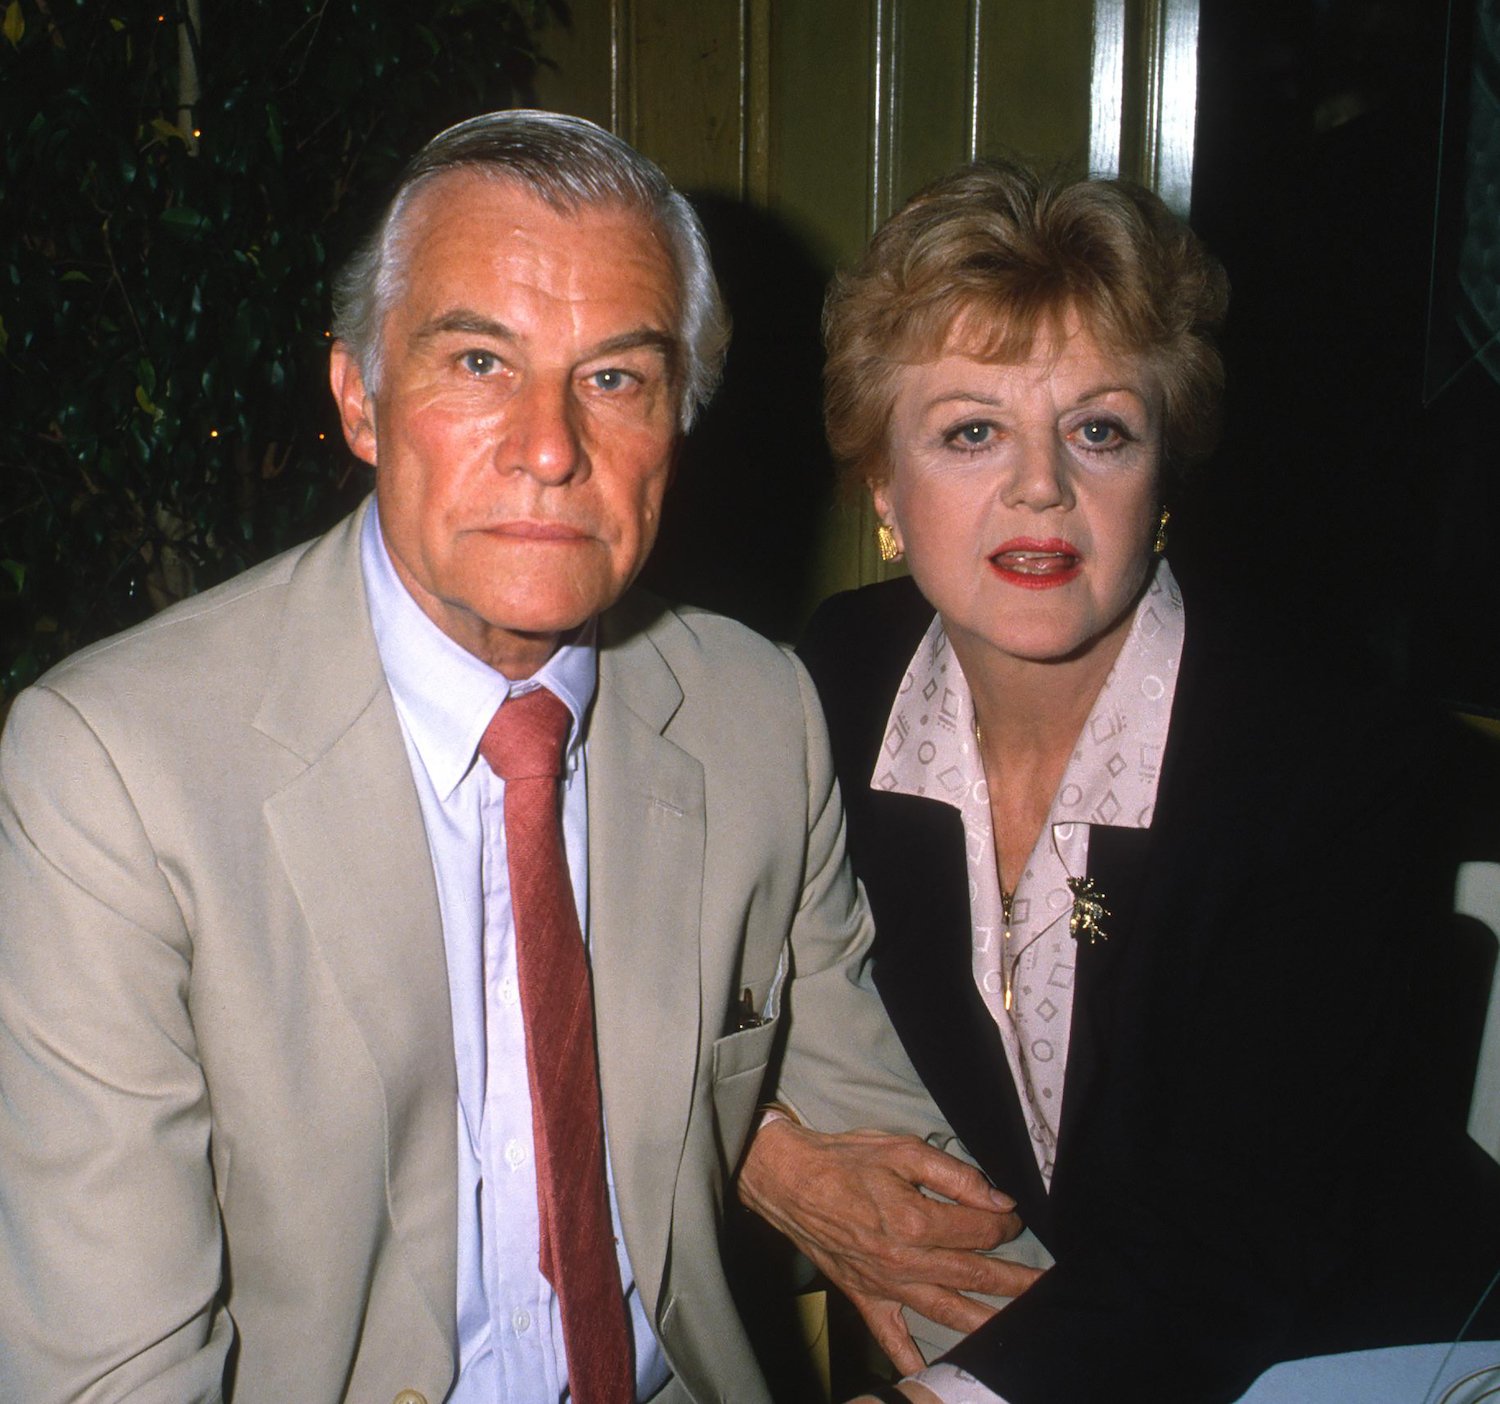 Angela Lansbury's husband, Peter Shaw, sitting next to her